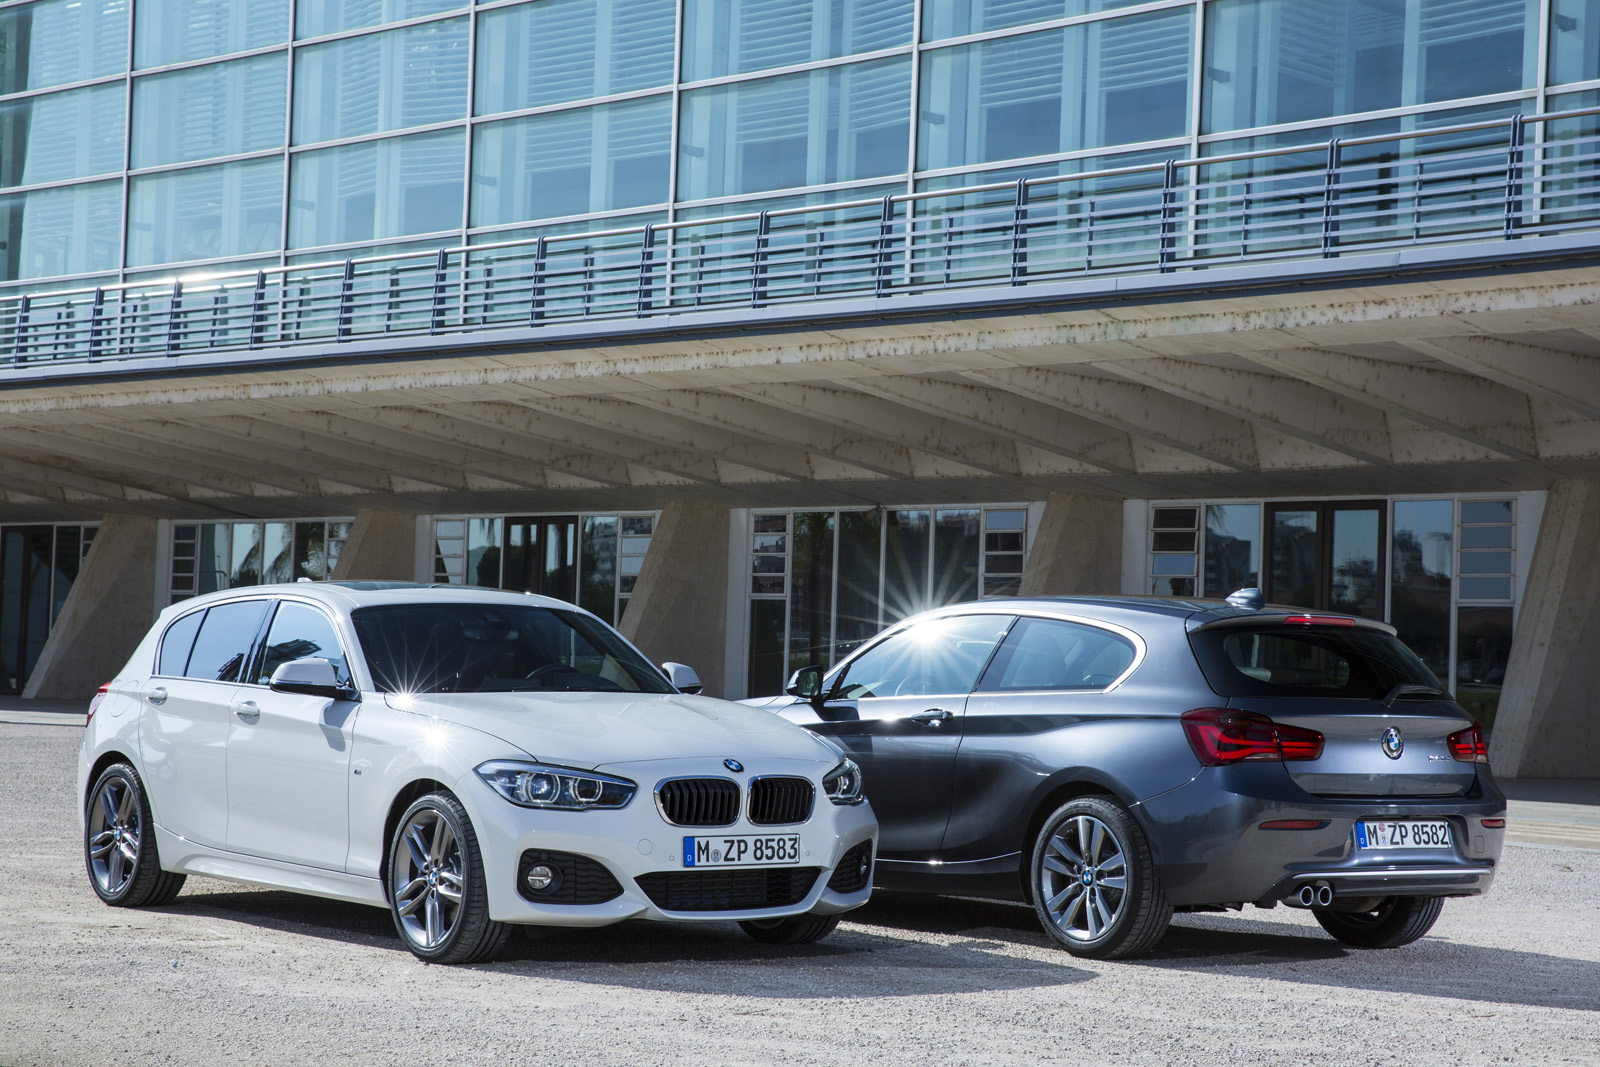 BMW Serie 1 F20 LCI: bentornata BMW (Update) - BMWnews